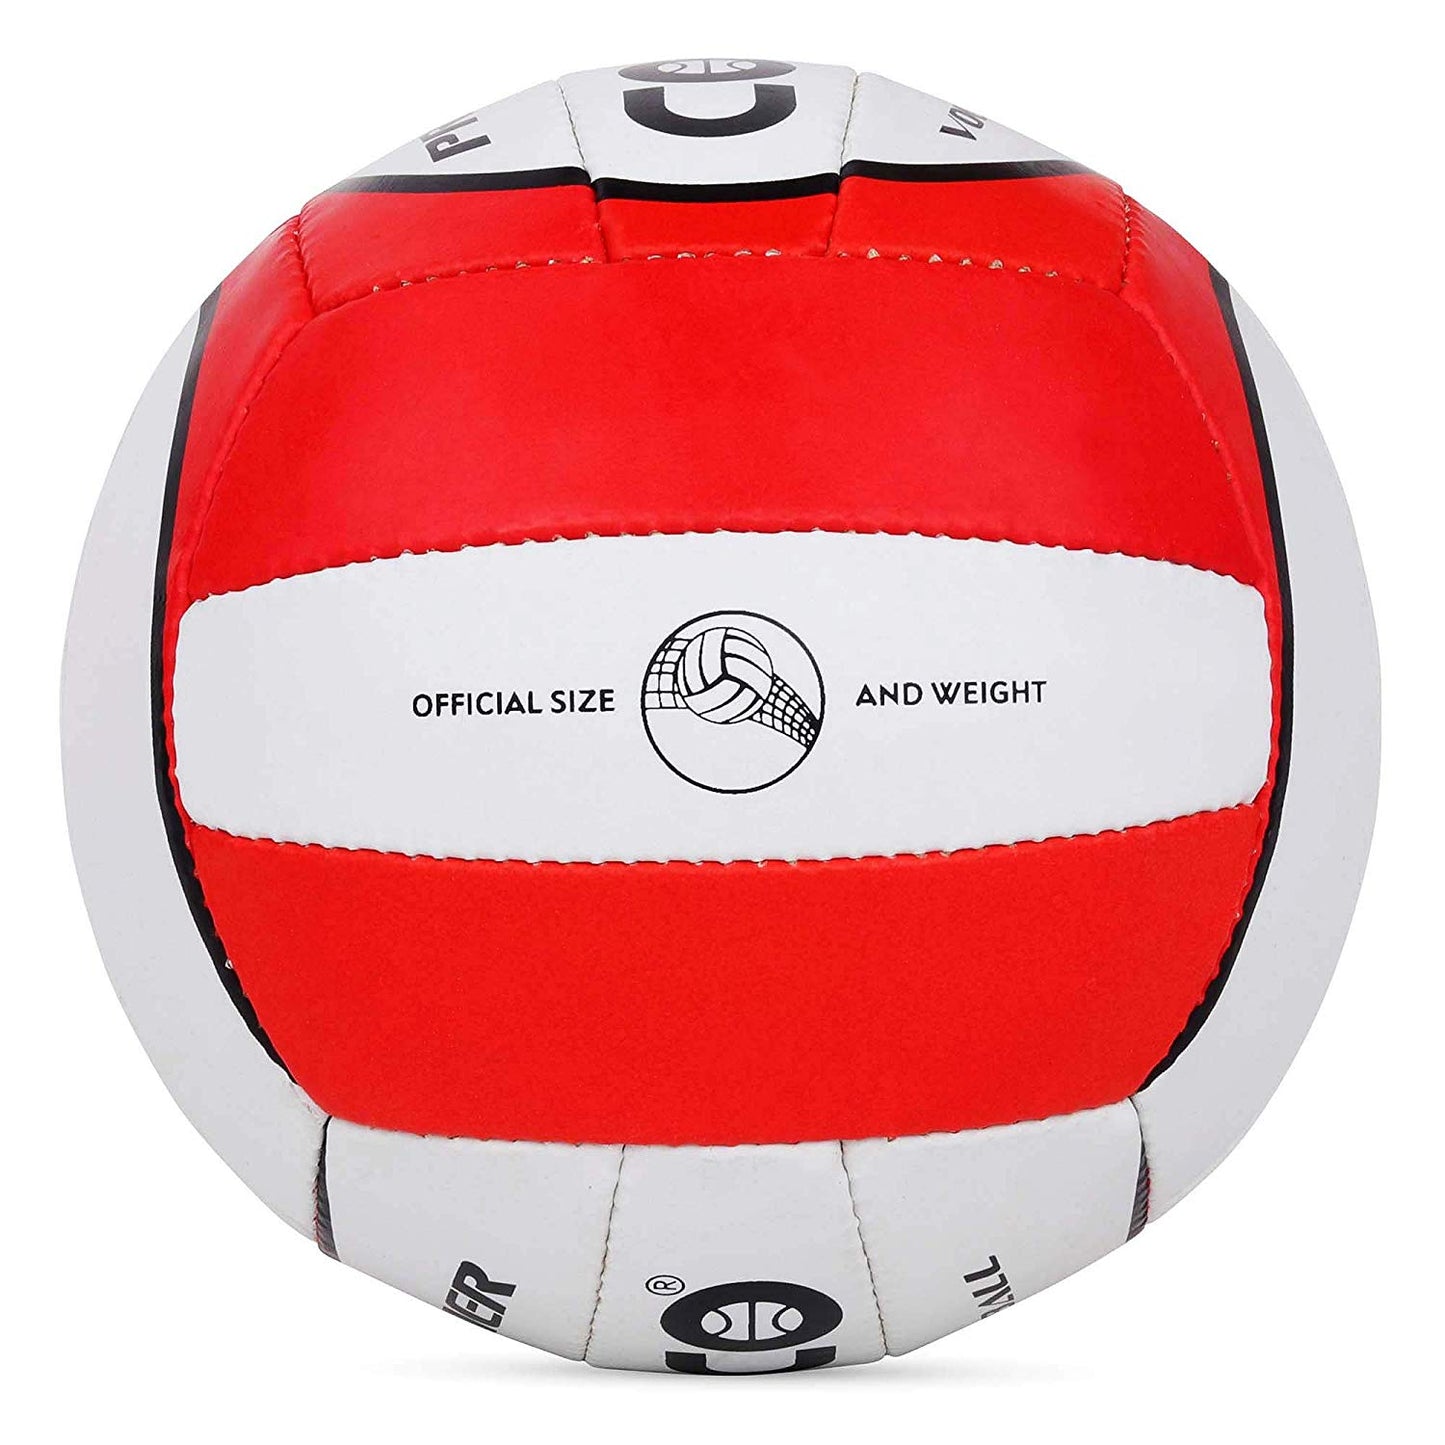 Cosco Premier Volley Ball, Size 4 - Best Price online Prokicksports.com